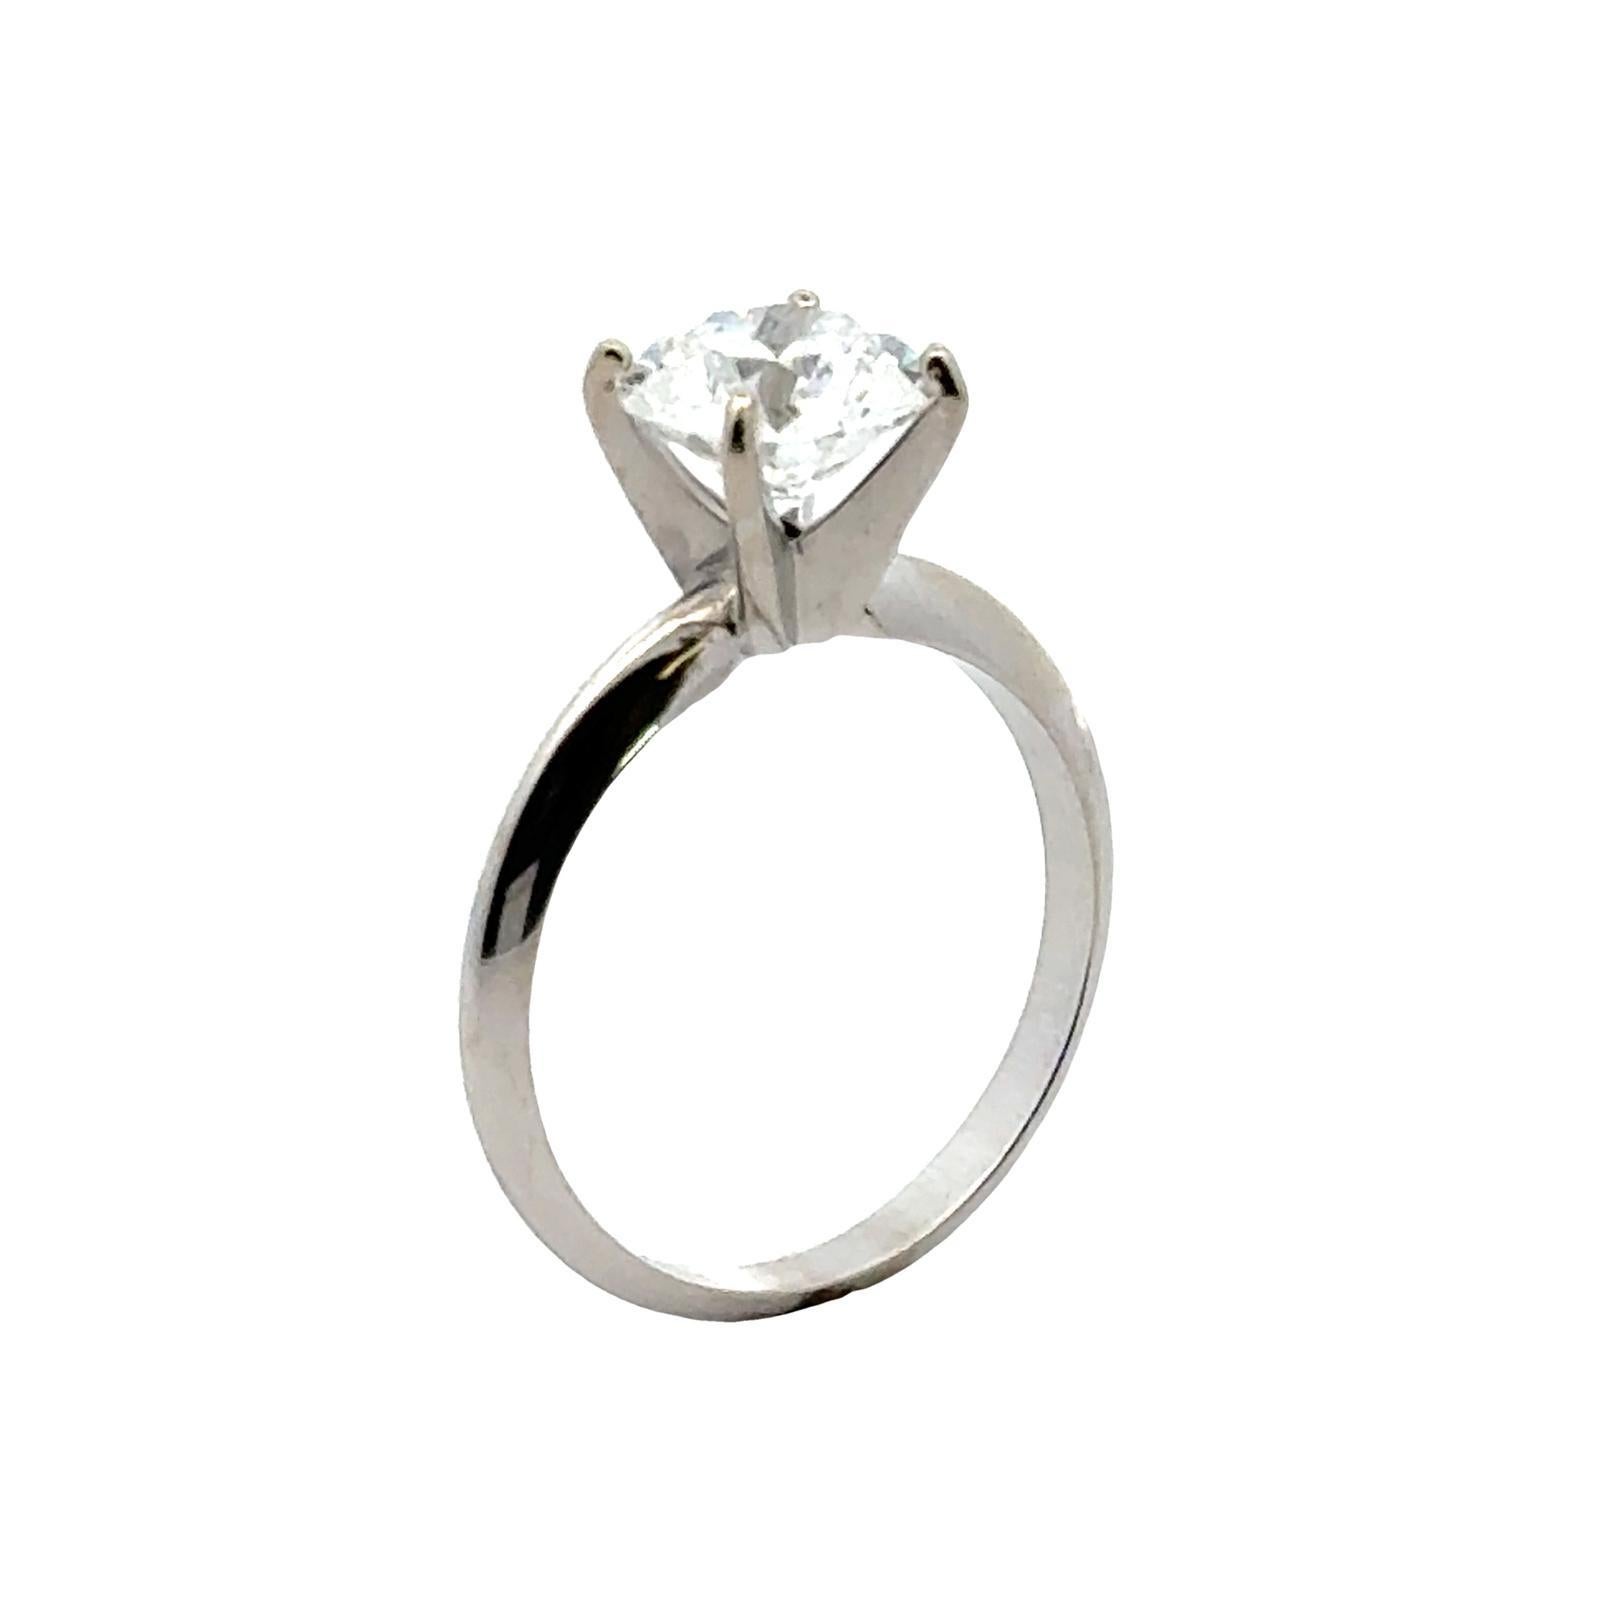 1.66 Carat Round Brilliant Diamond Solitaire Engagement Ring GIA Cert D/VVS2 In Excellent Condition For Sale In Boca Raton, FL